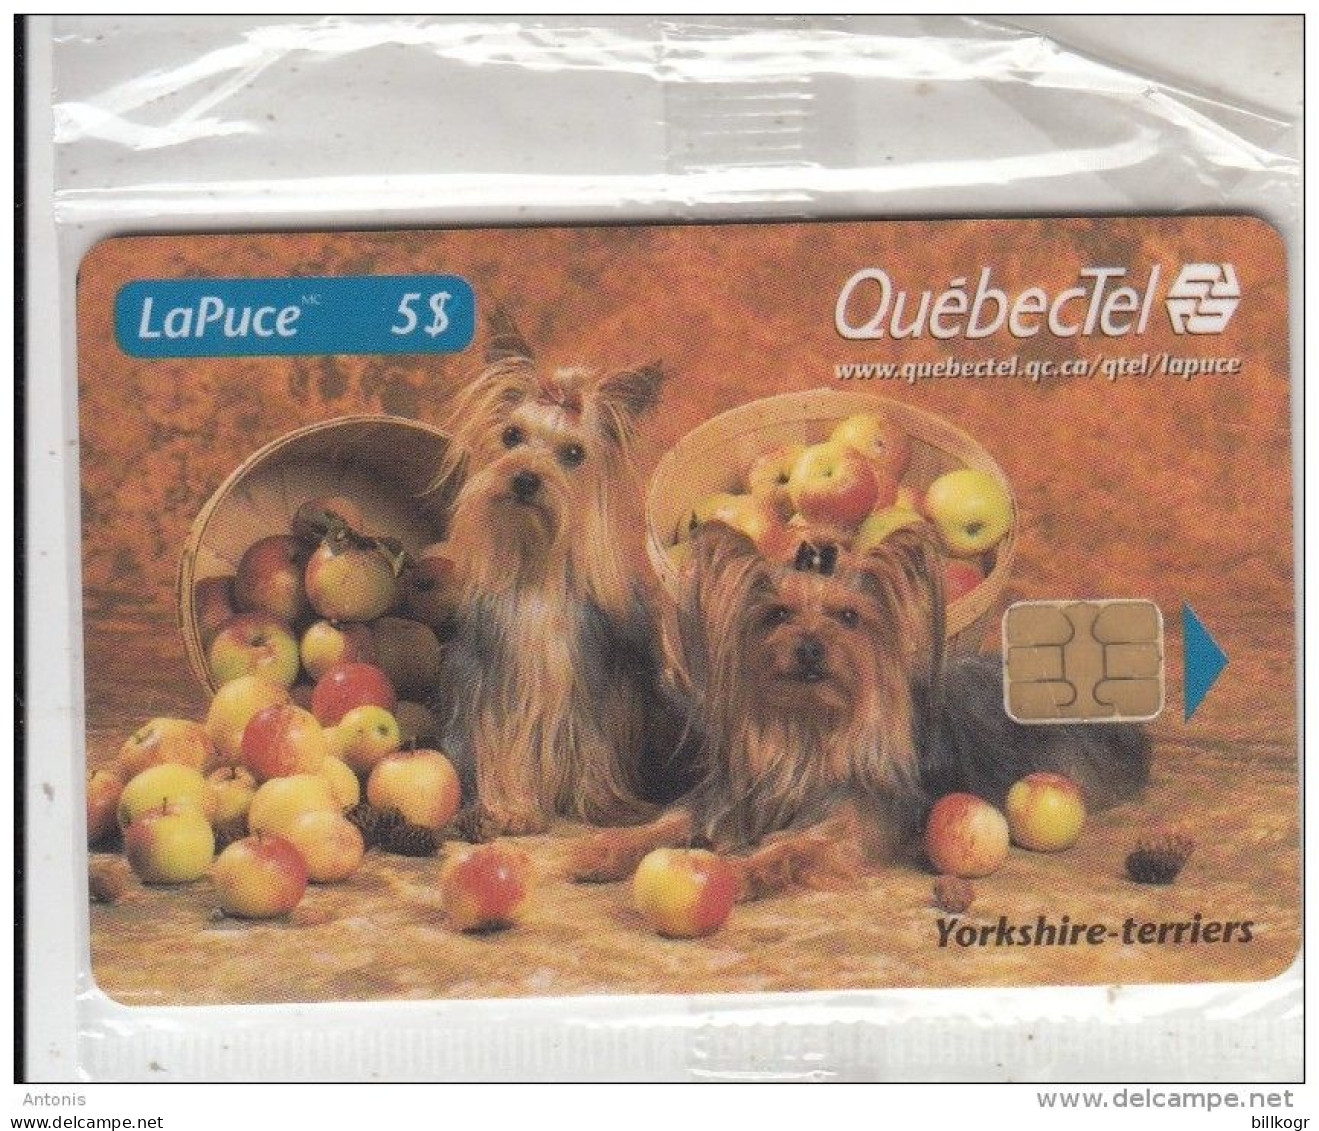 CANADA - Dogs, QuebecTel Telecard $5, Tirage 5000, 10/98, Mint - Canada